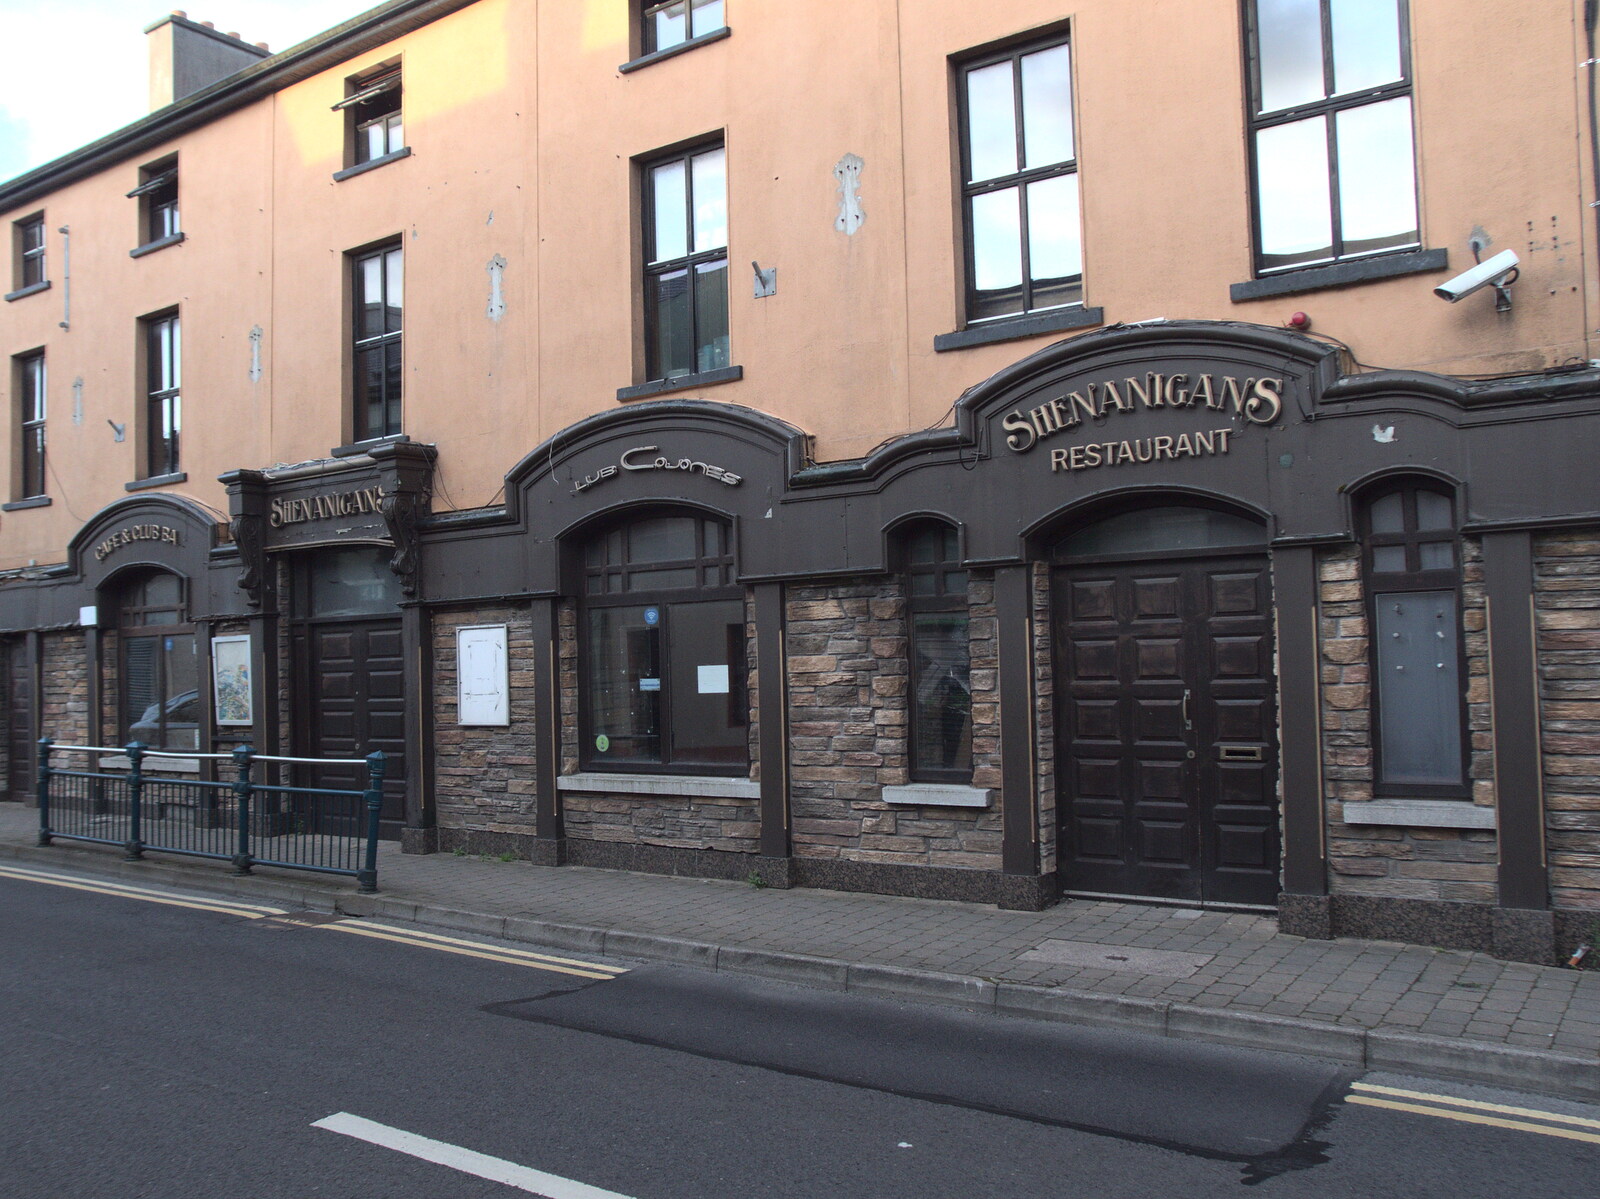 Another closed bar on Bridge Street from Walks Around Benbulben and Carrowmore, County Sligo, Ireland - 13th August 2021